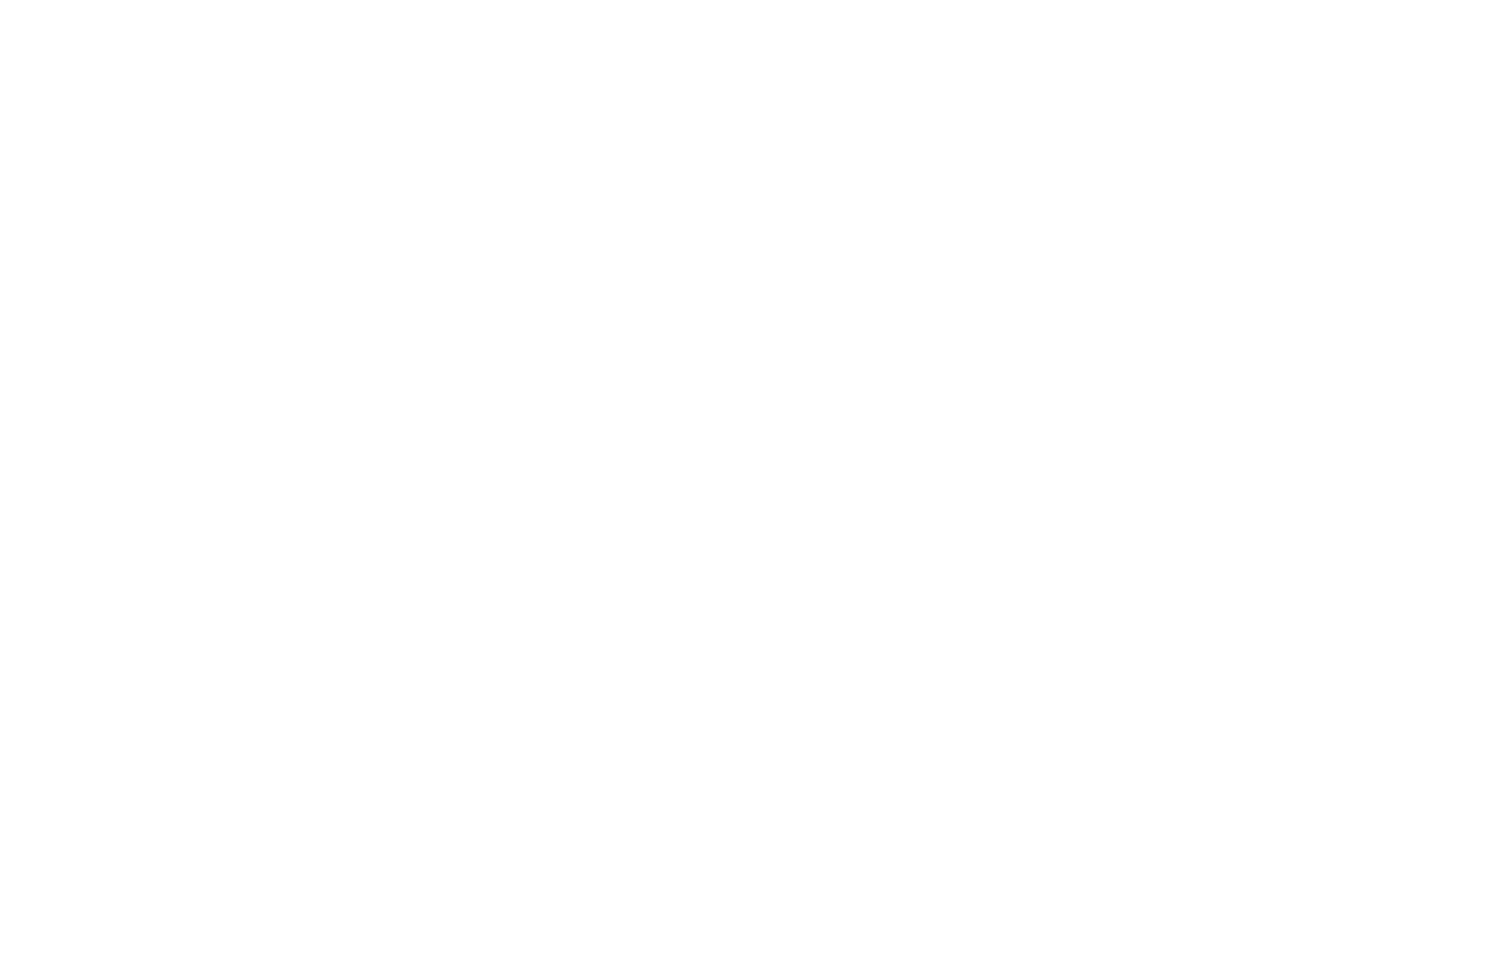 BROOKLYN KOREAN SCHOOL